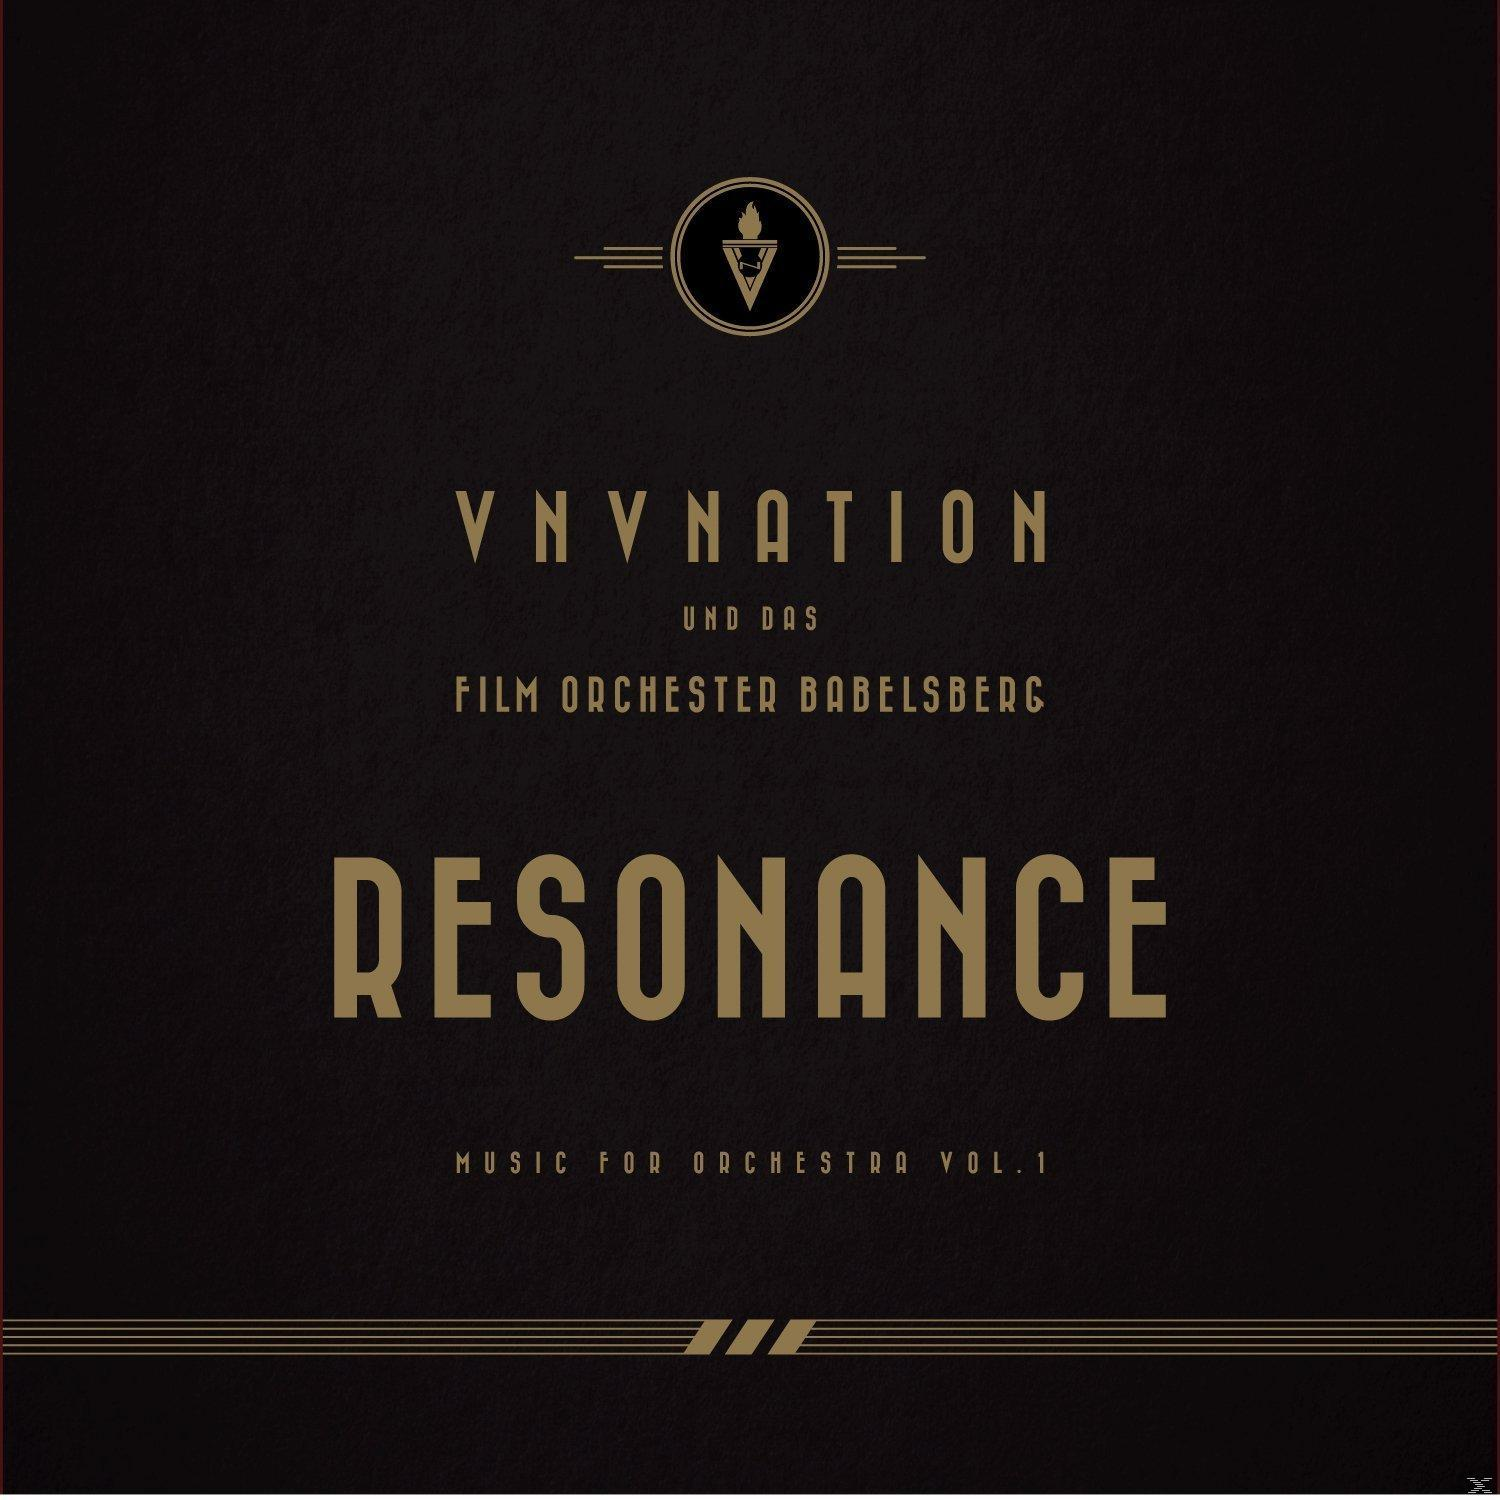 Vnv Nation - Orchestra) The (CD) - Babelsberg Resonance (With Film